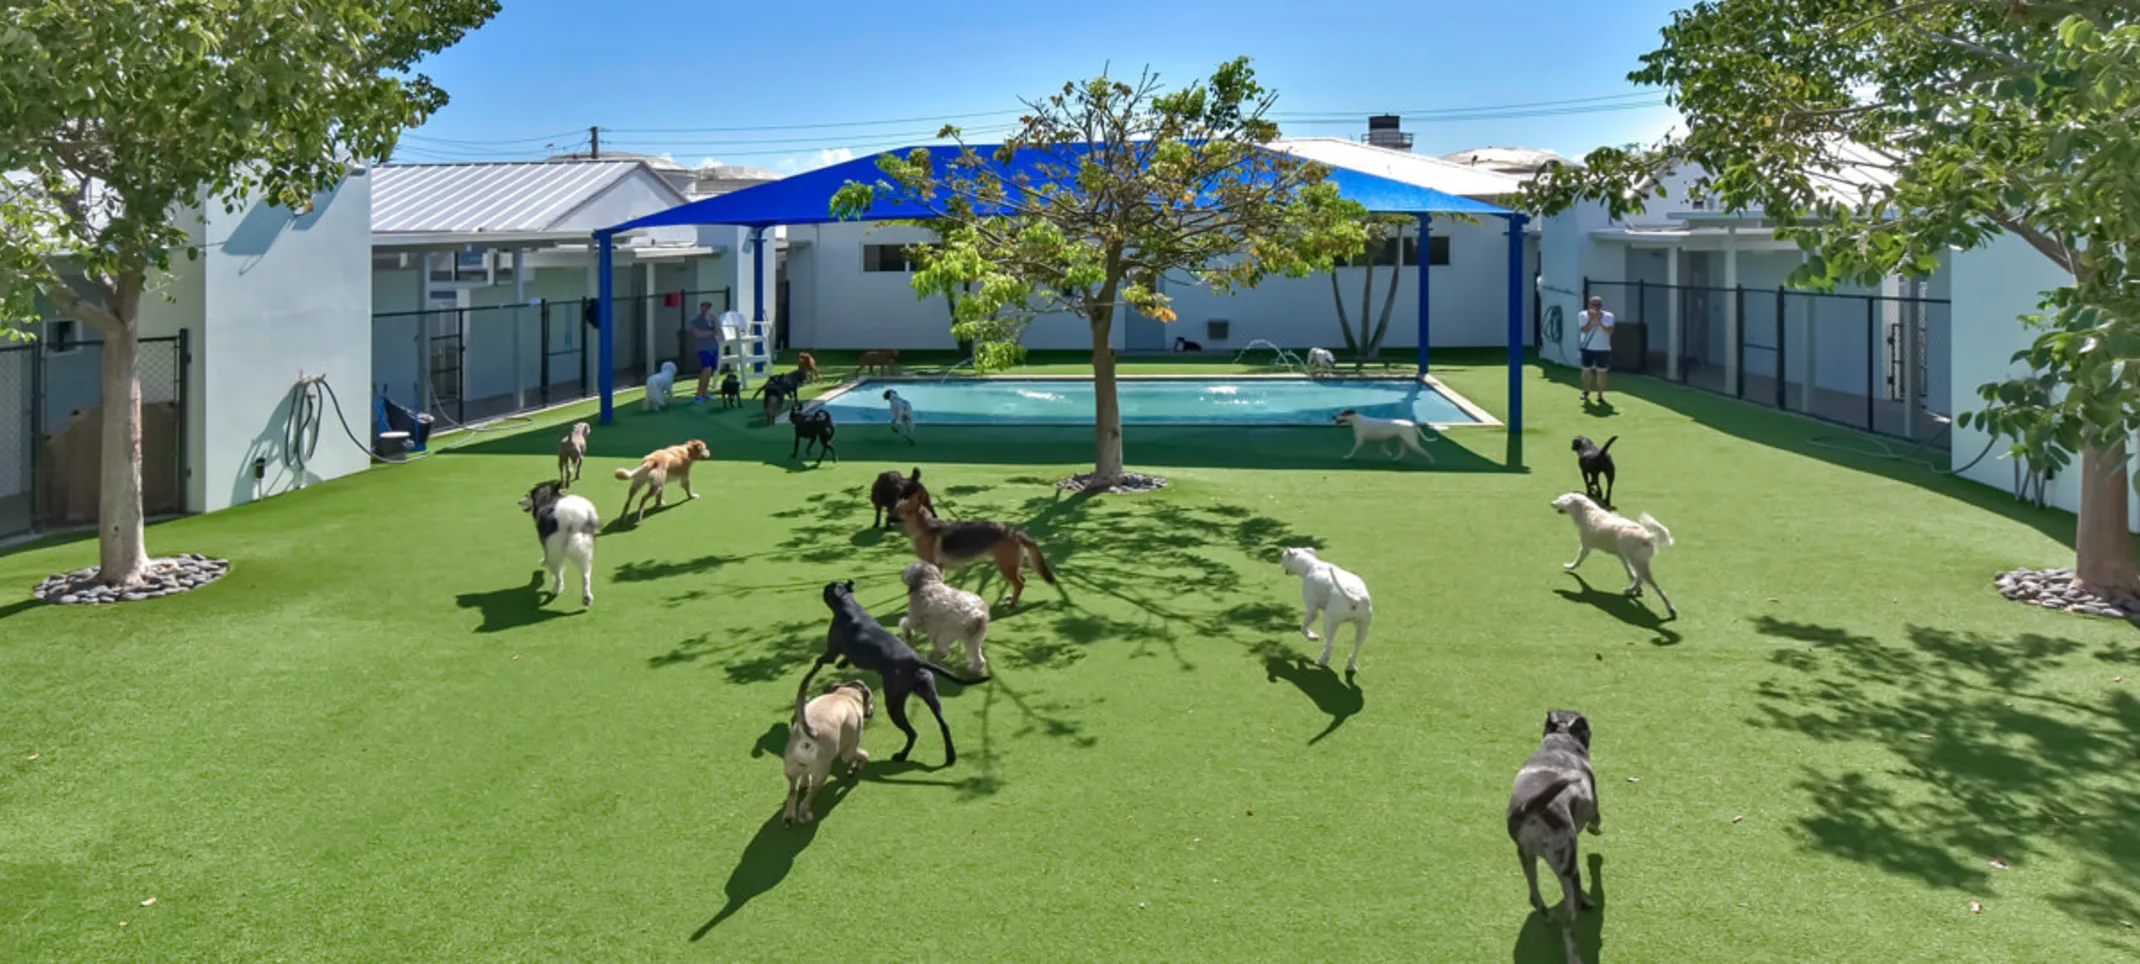 Lauderdale Pet Lodge Yard Area